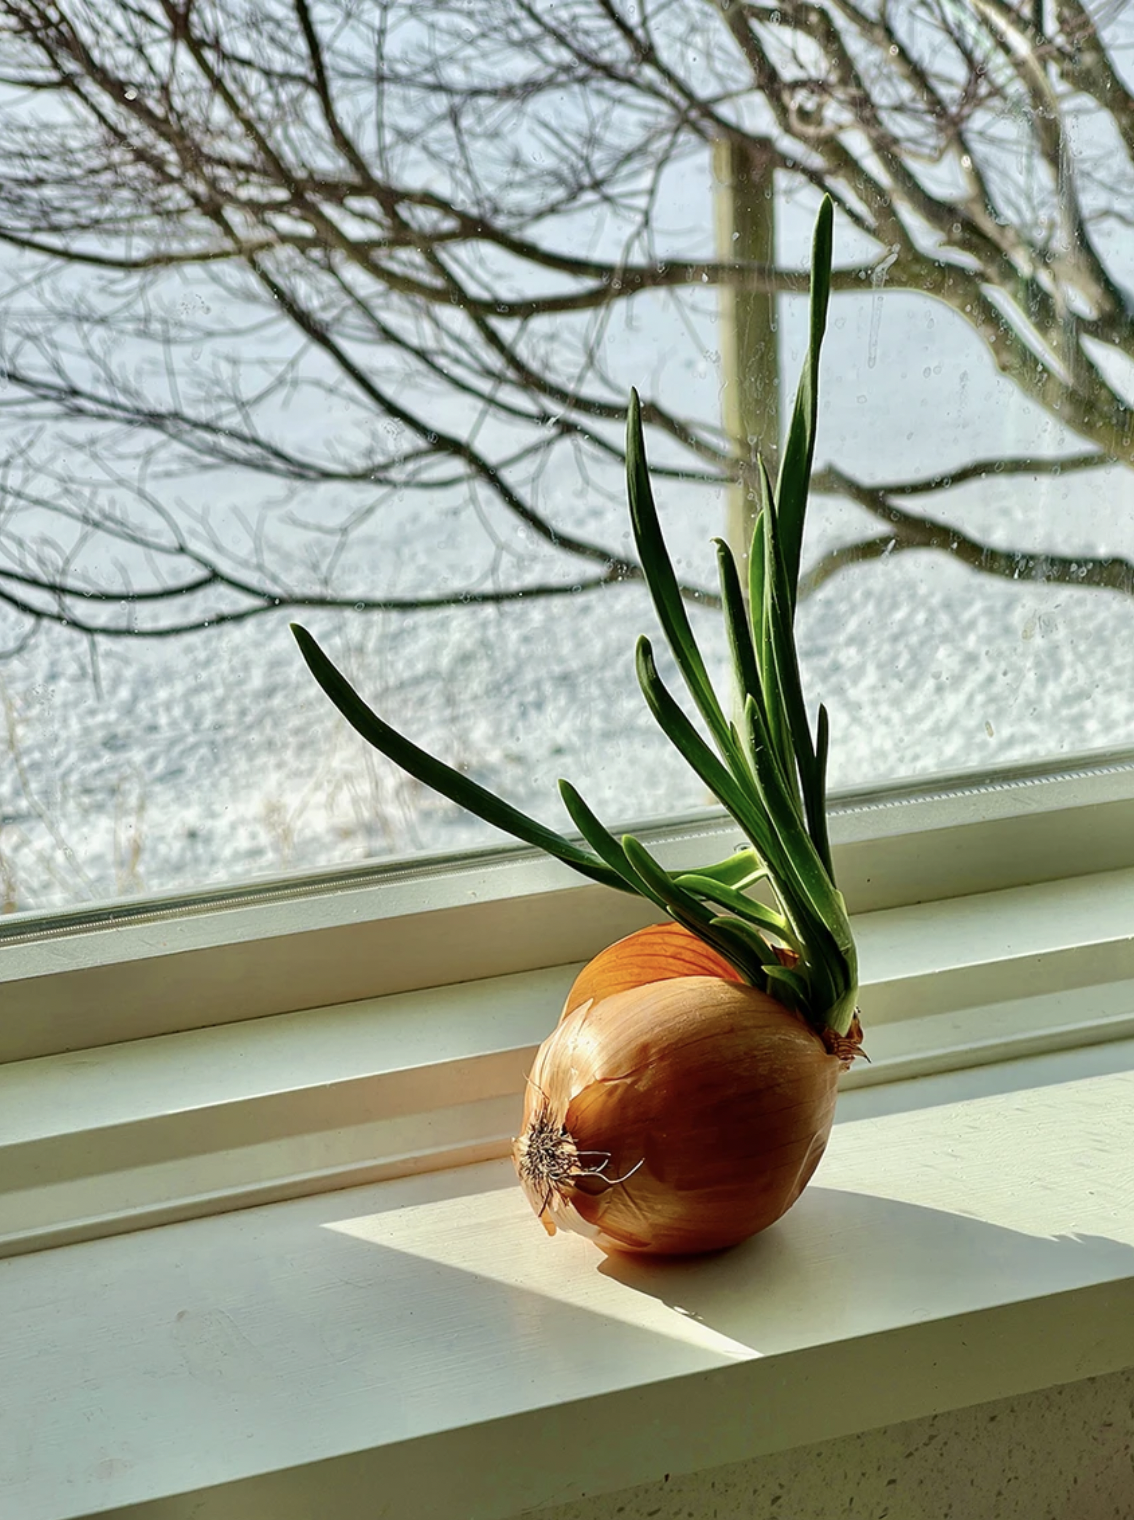 Berkshire Onion